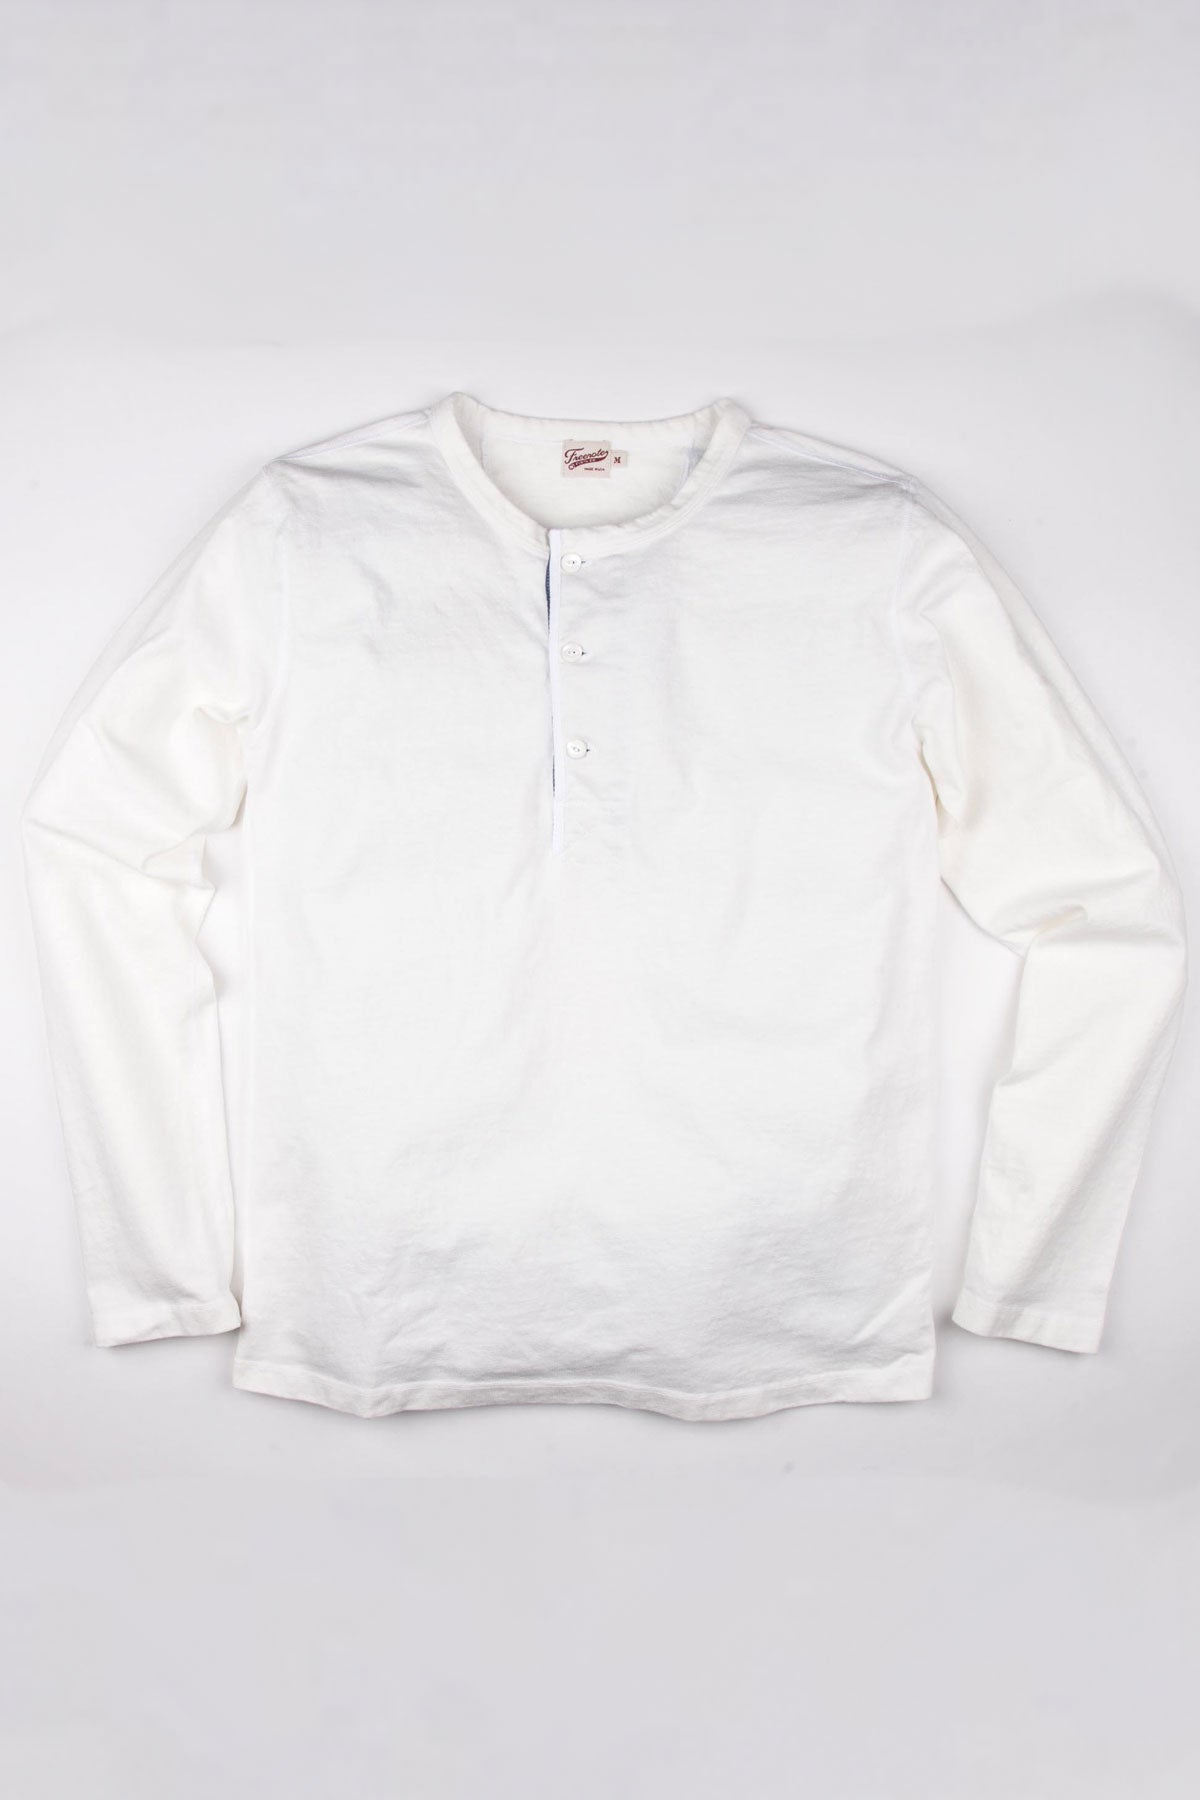 Freenote Cloth - 13 Ounce Henley - L/S White